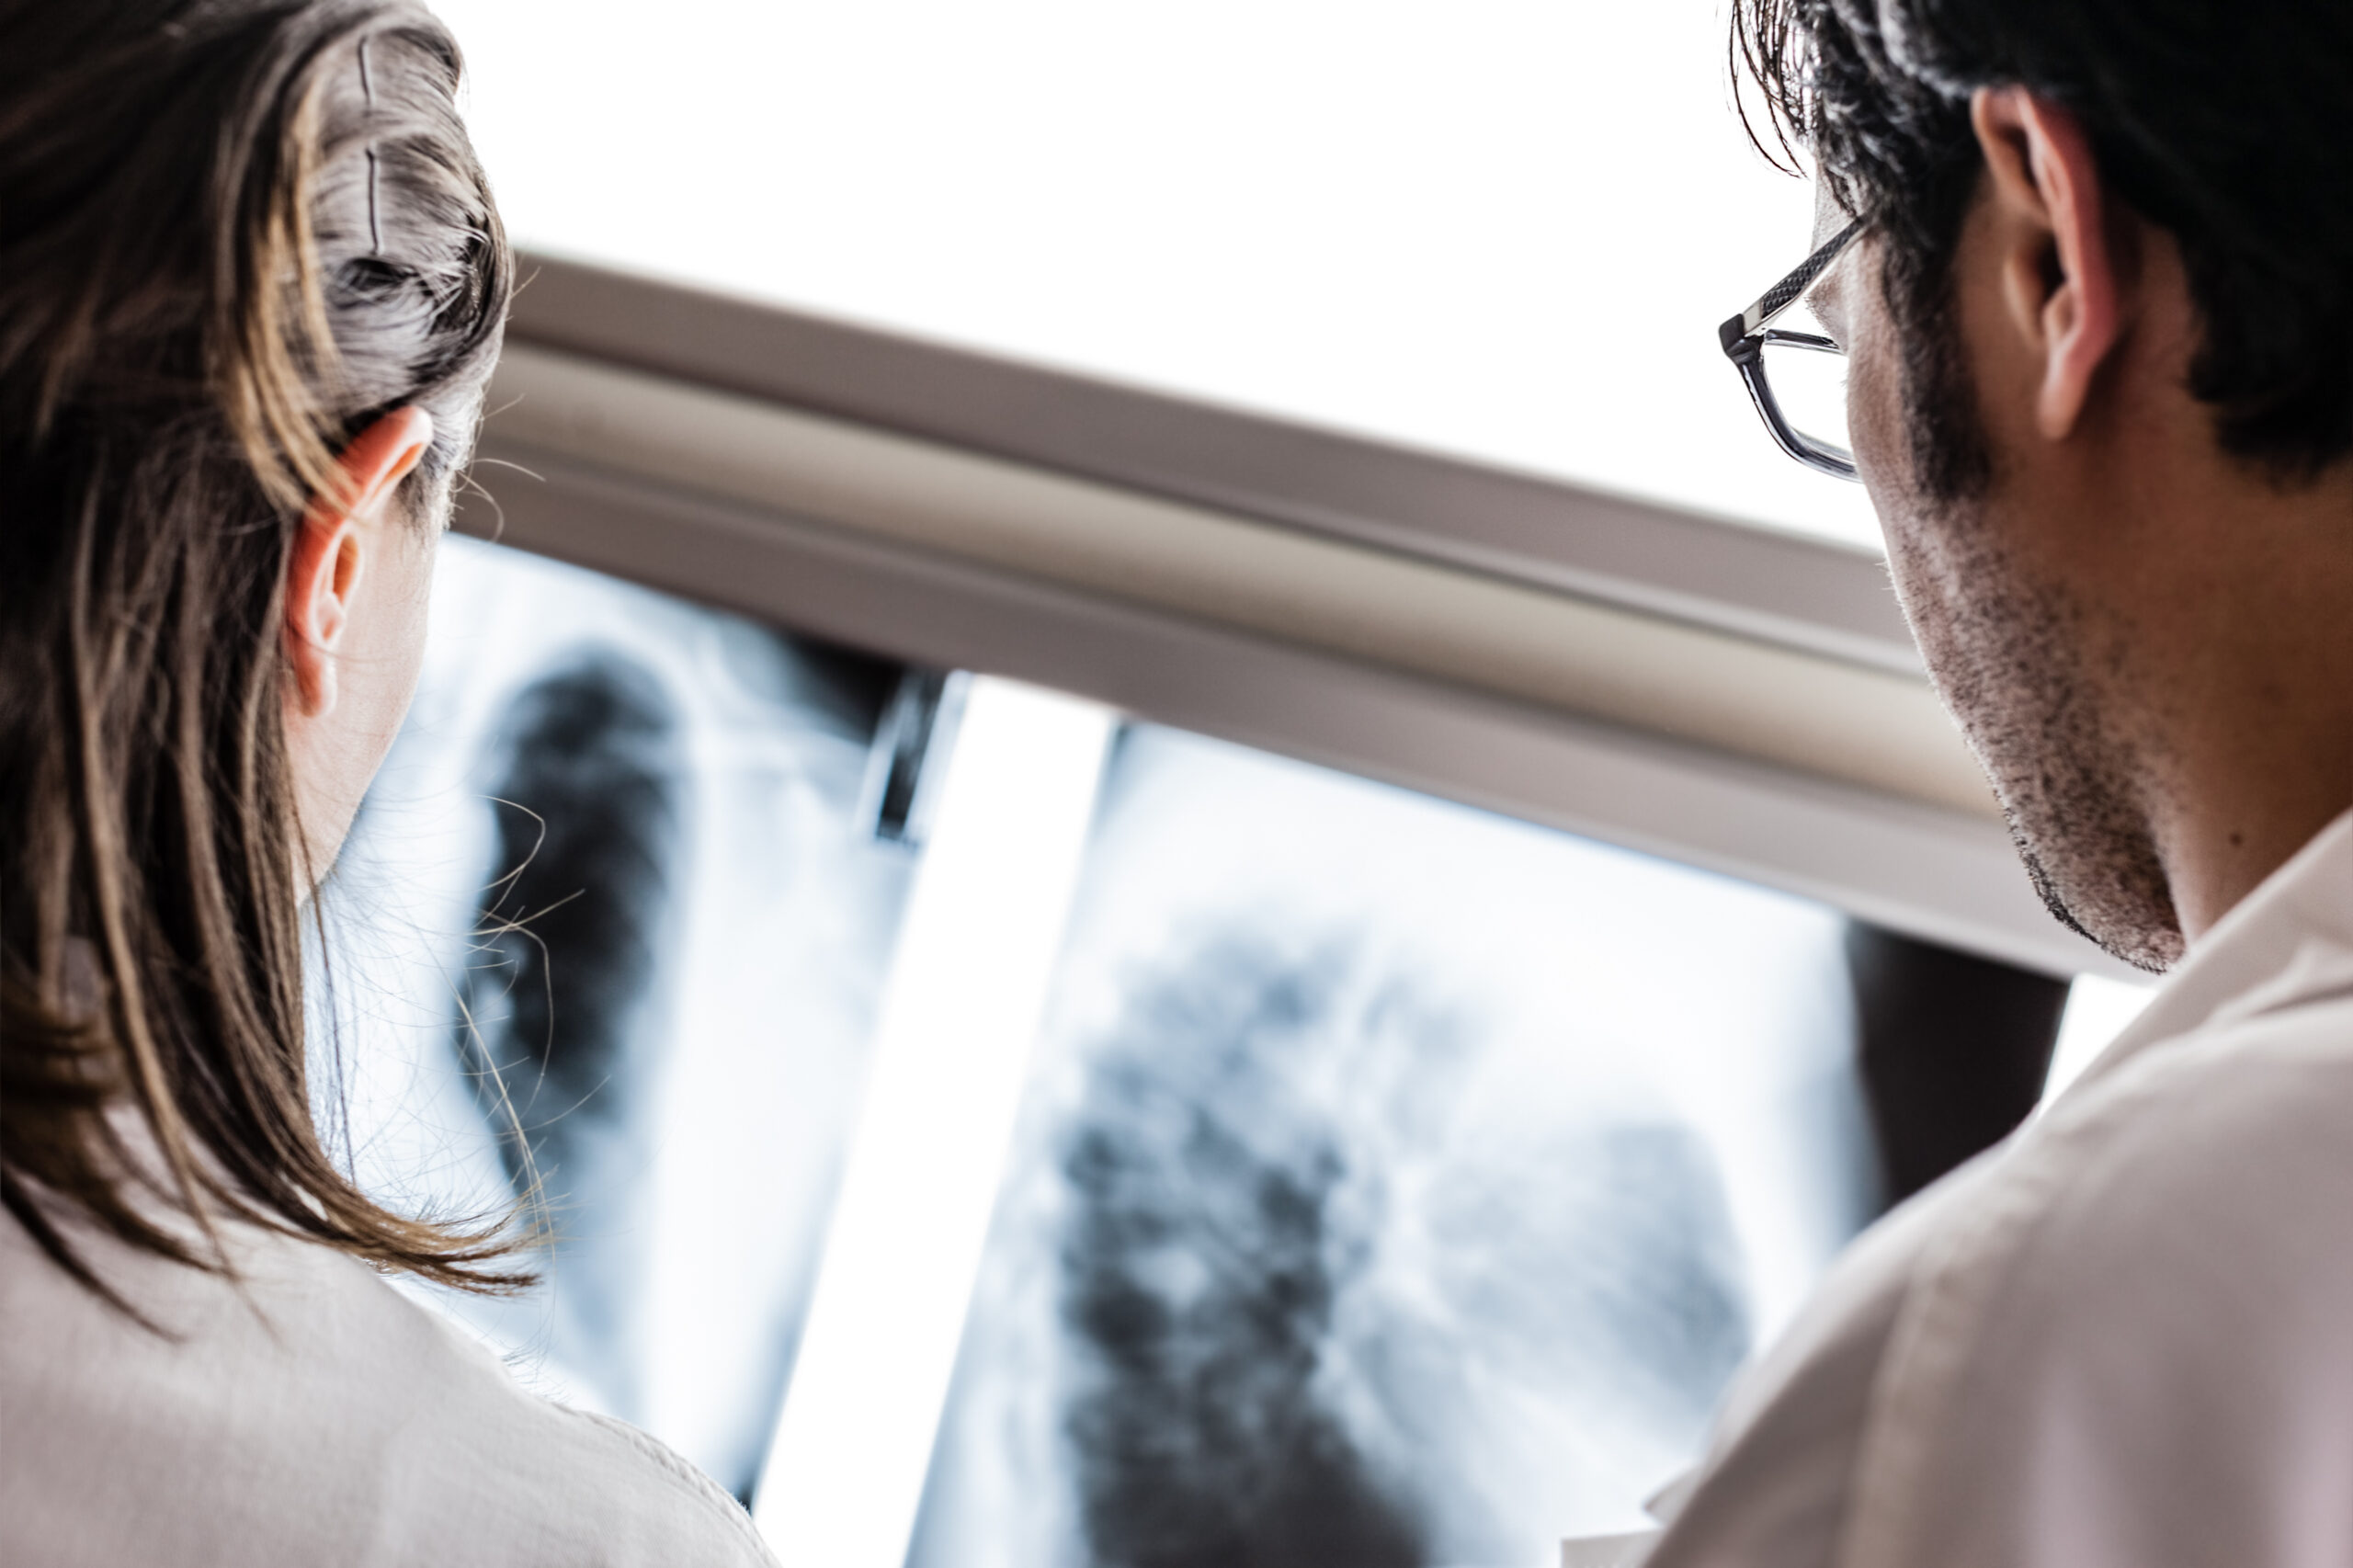 Diagnostic radiography